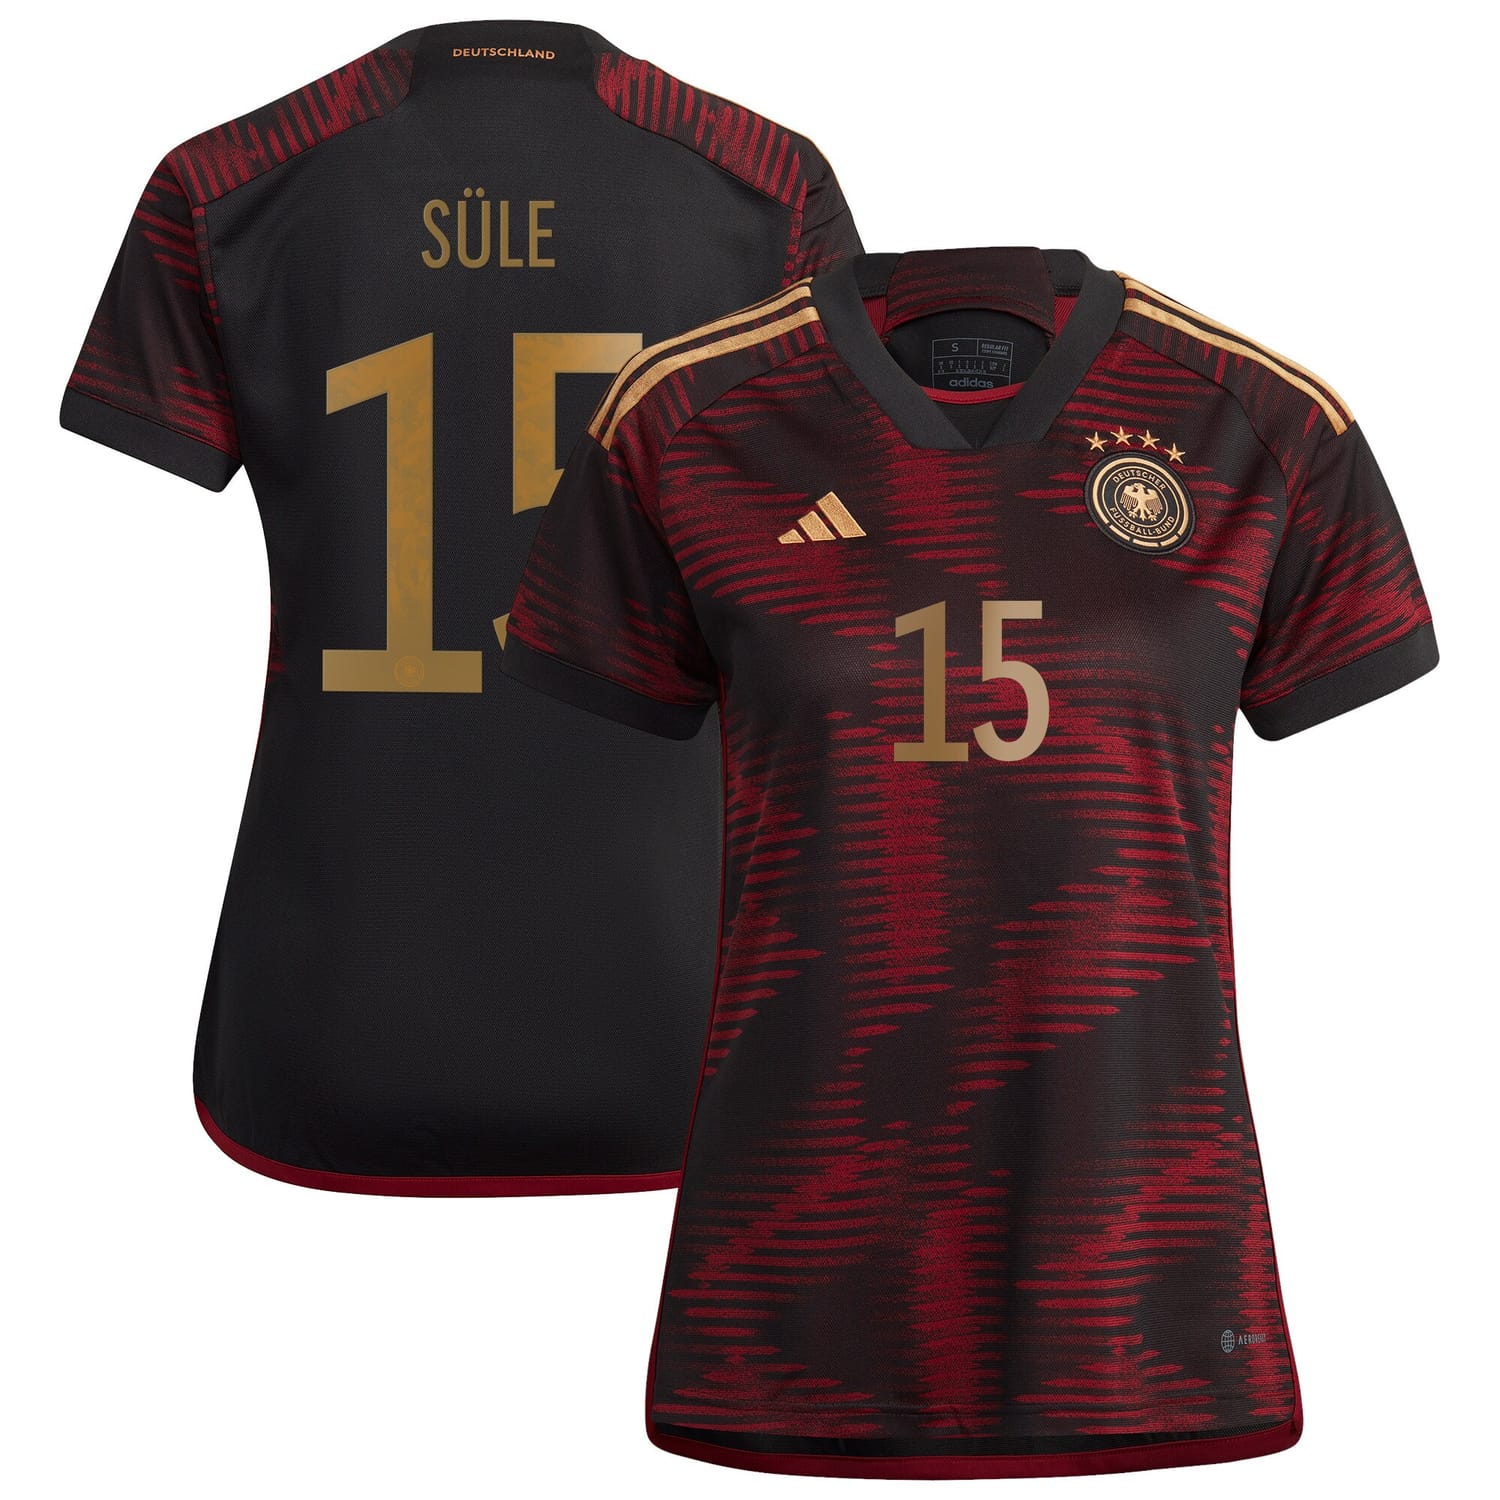 Germany National Team Away Jersey Shirt player Niklas Süle 15 printing for Women